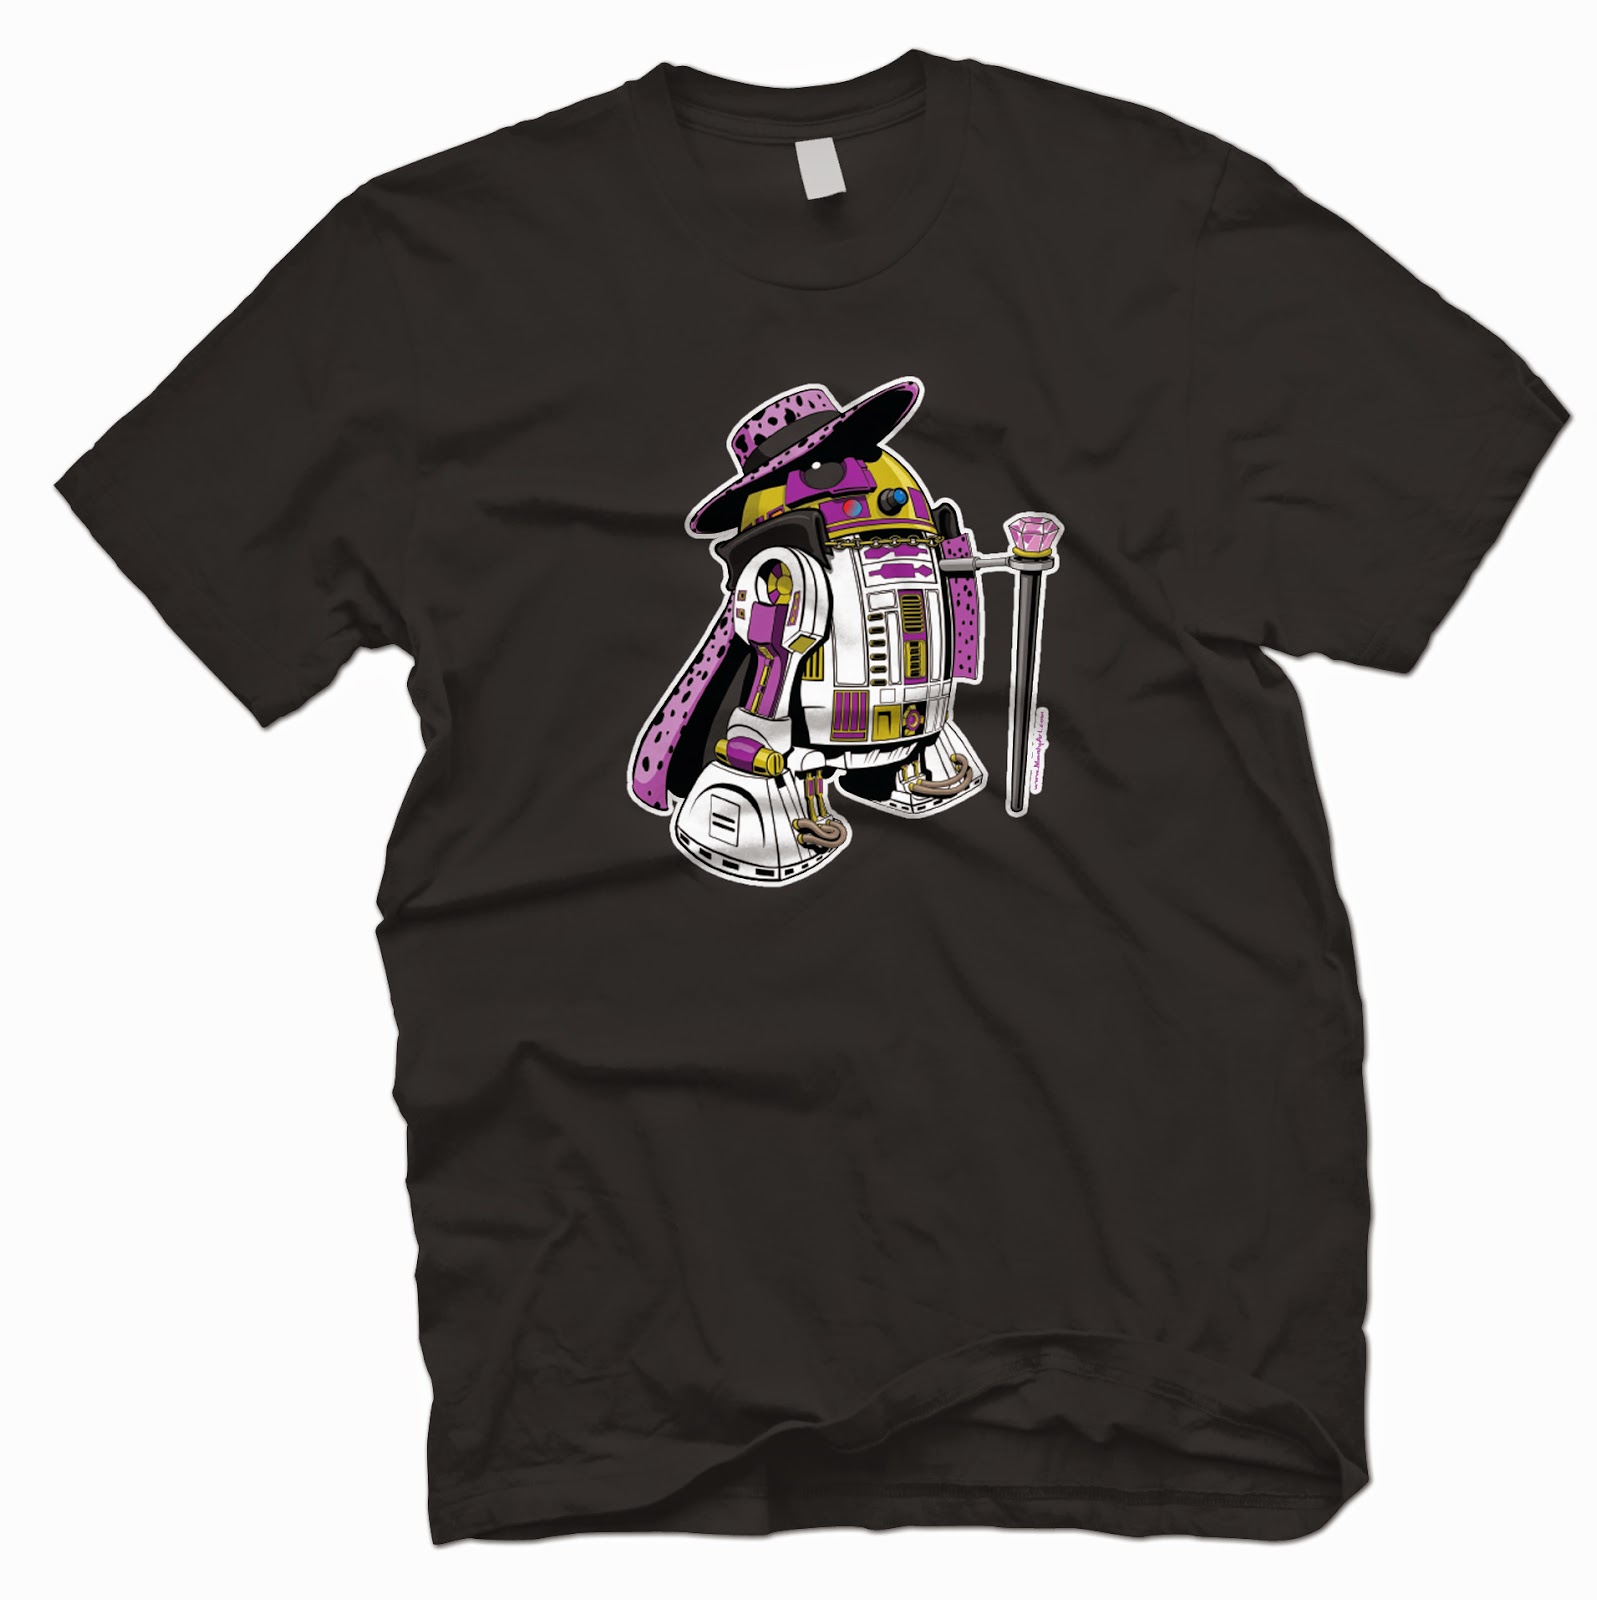 Pimp2-D2 Star Wars T-Shirt by Manly Art & Outsmart Originals